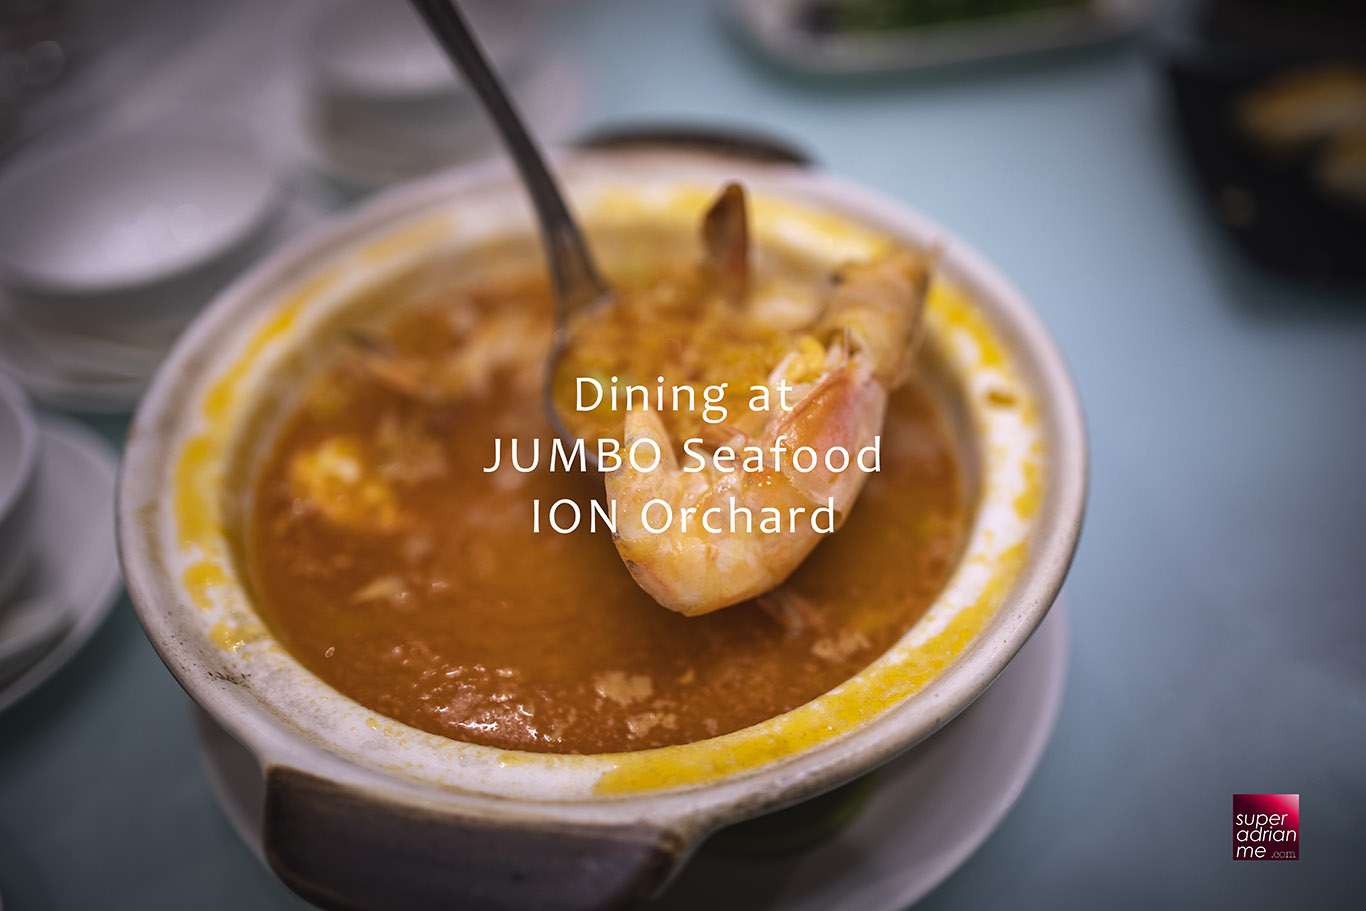 JUMBO Seafood ION Orchard